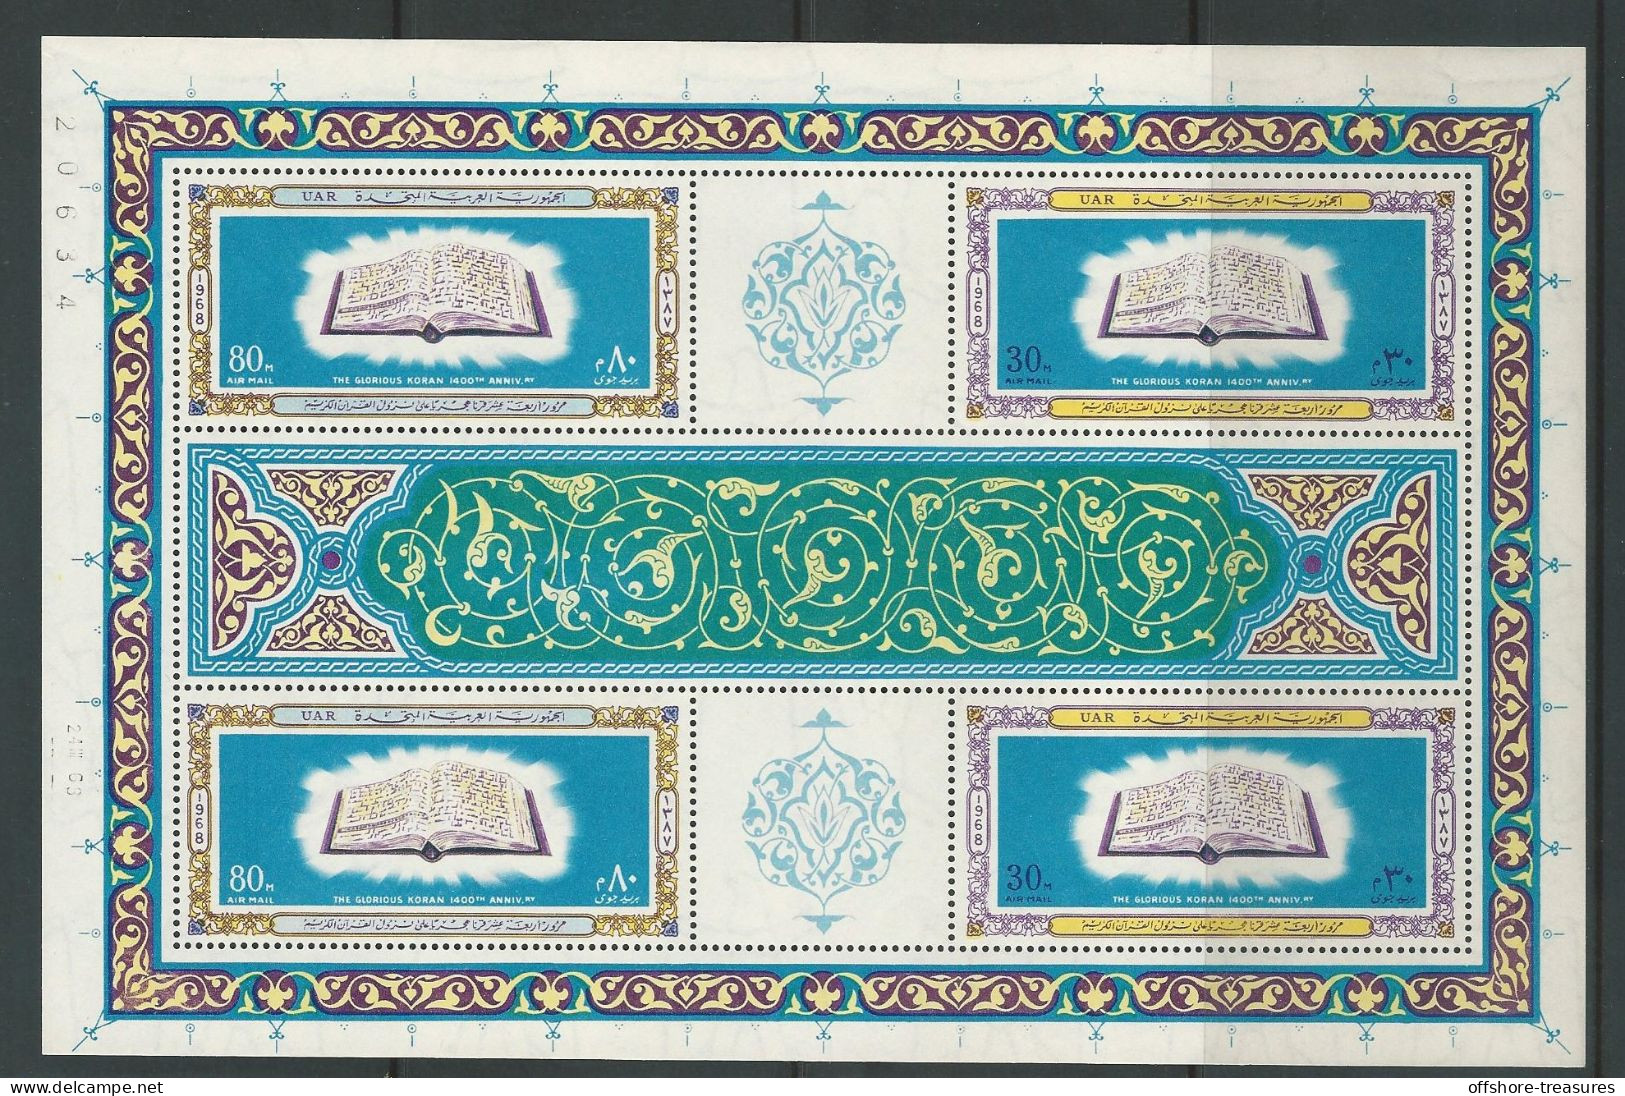 Egypt 1968 1400th Anniversary Of The Holy Koran Sheet-let /Sheet / 2 Stamp Set 80 & 30 Mills Air Mail - Ungebraucht